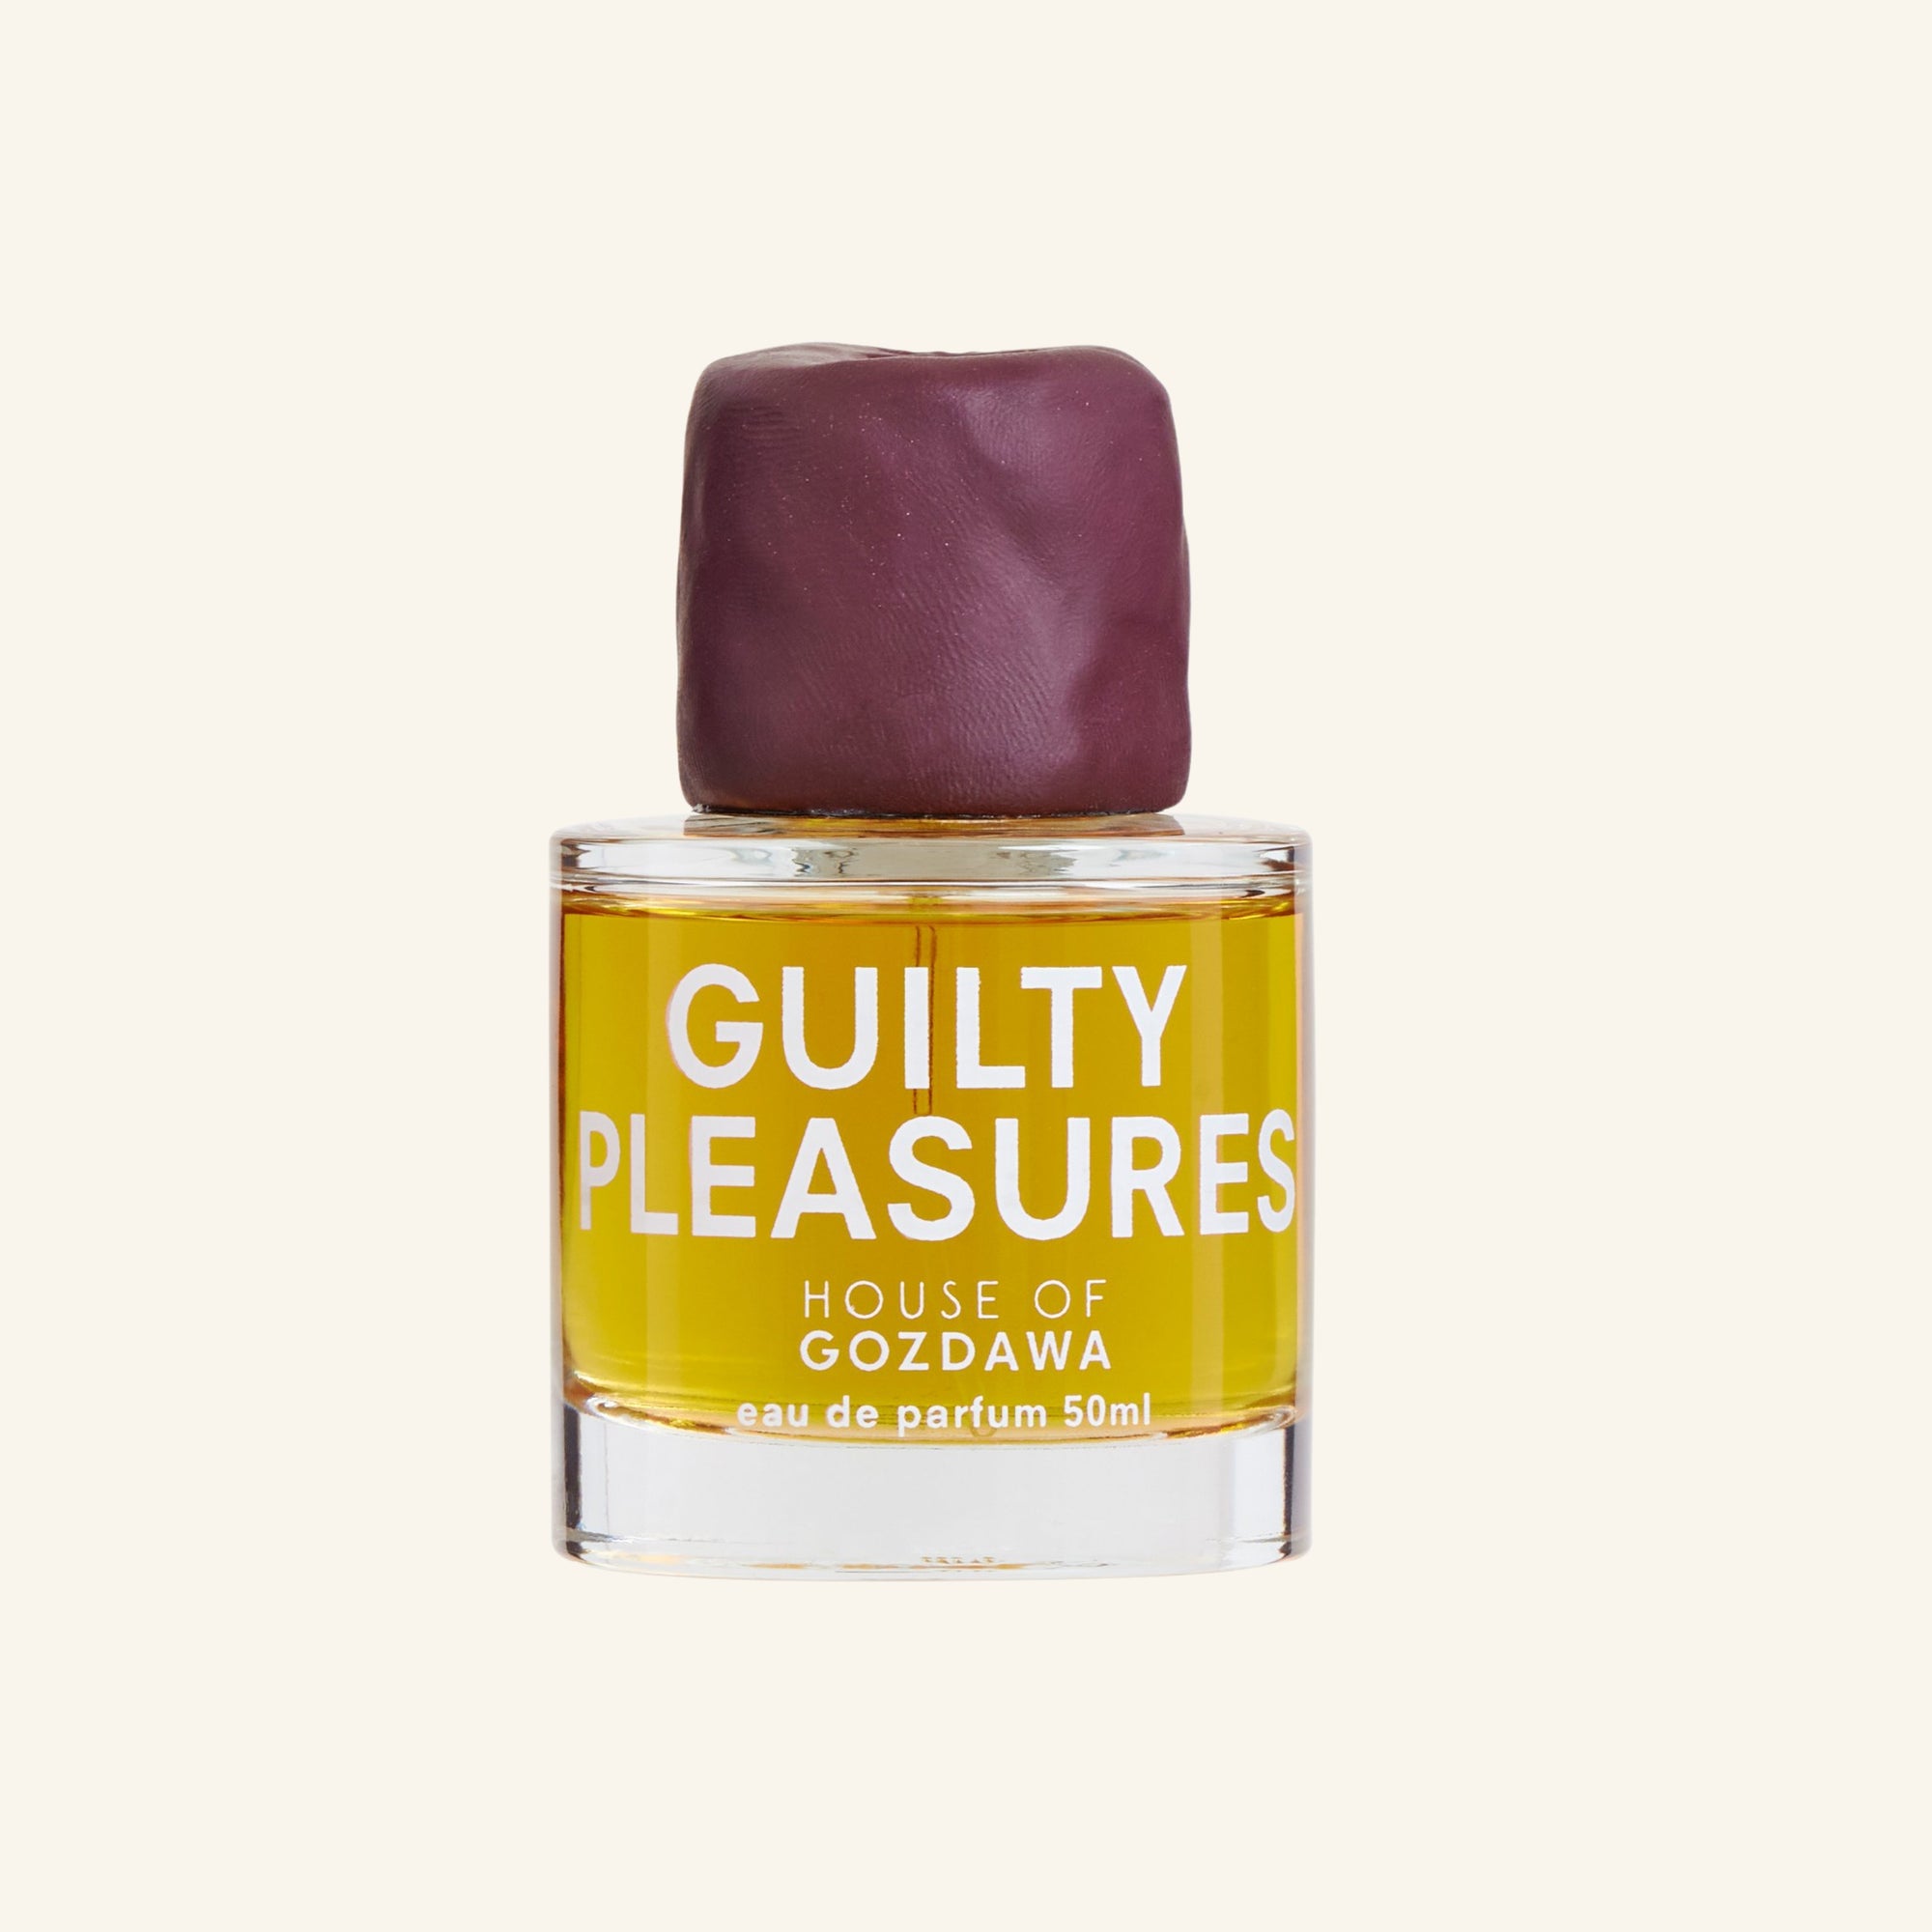 Guilty Pleasures extrait de parfum - 50ml